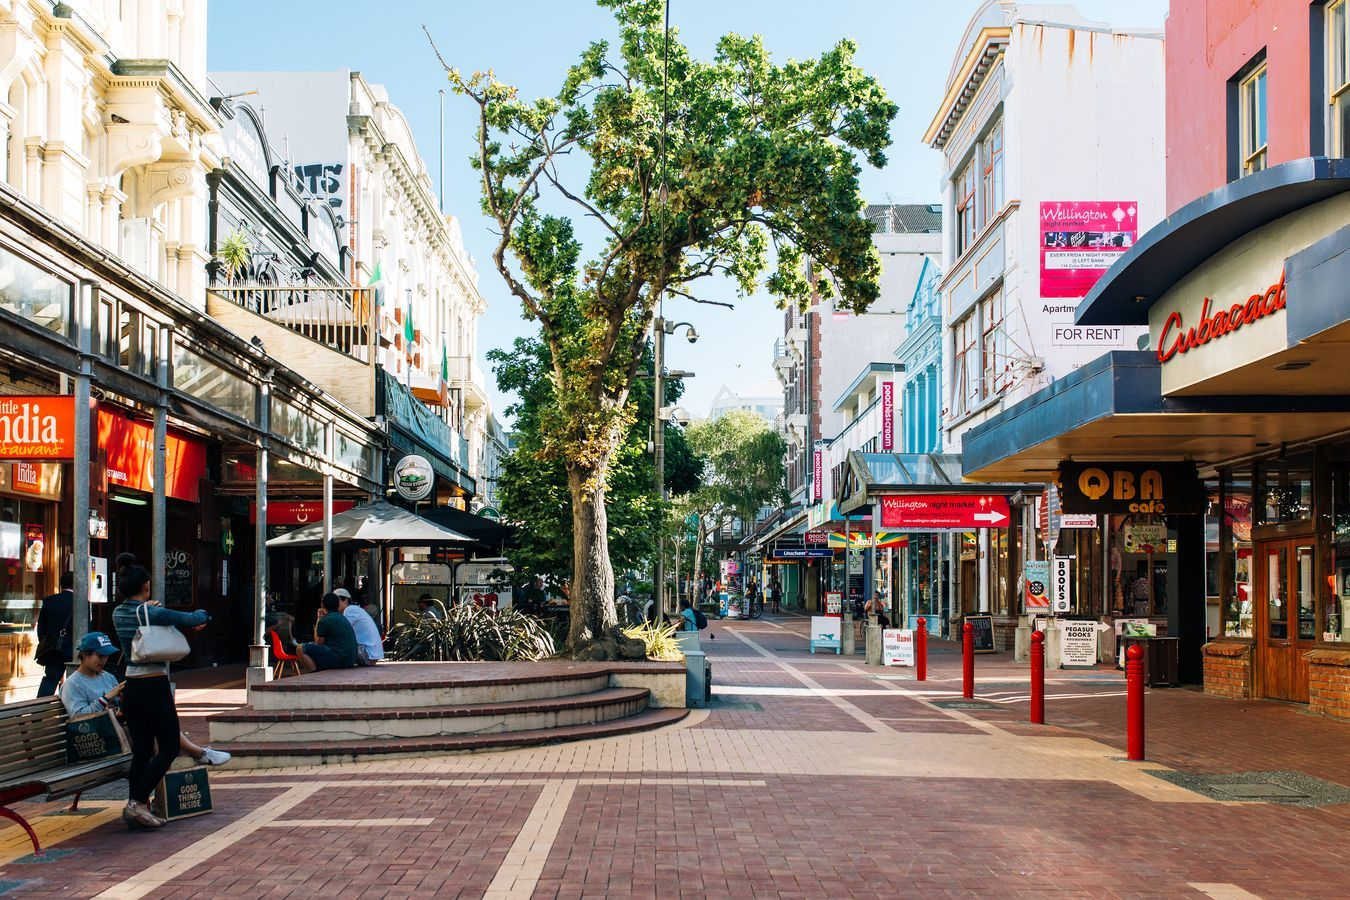 Cuba street, Wellington, New Zealand @neatplaces.co.nz